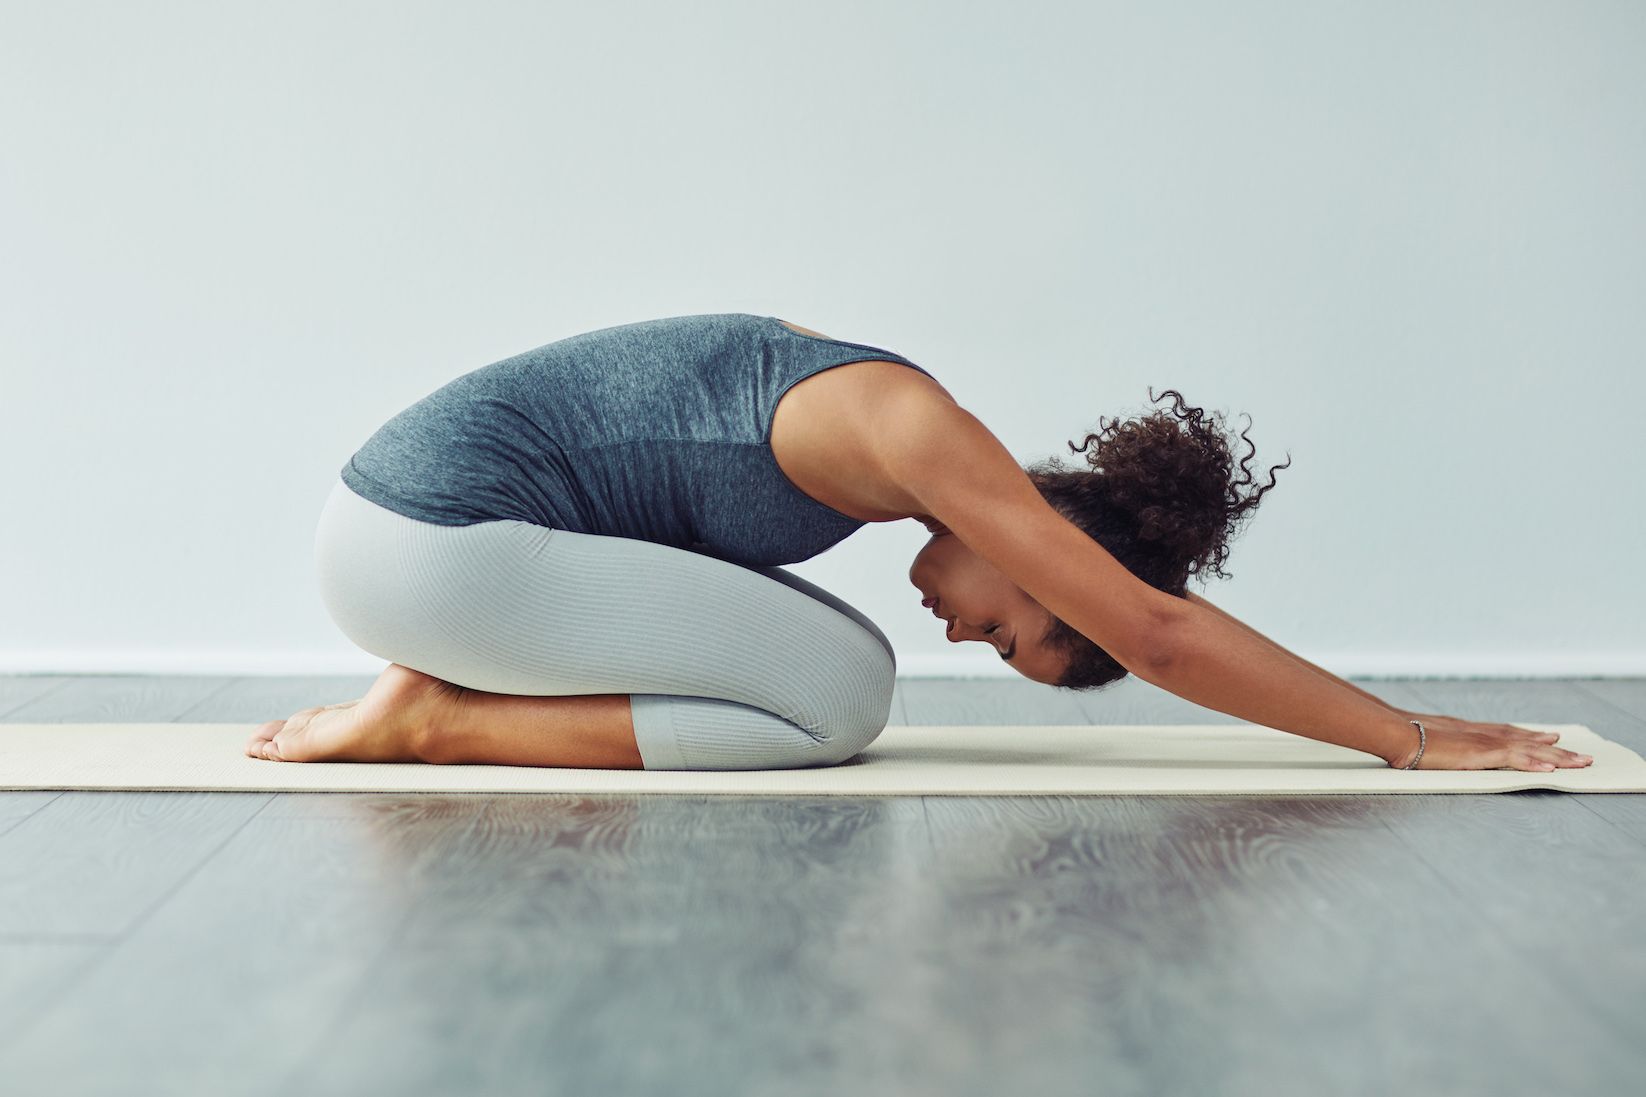 9 Yoga Poses to Relieve Back Pain - Nebraska Spine Hospital